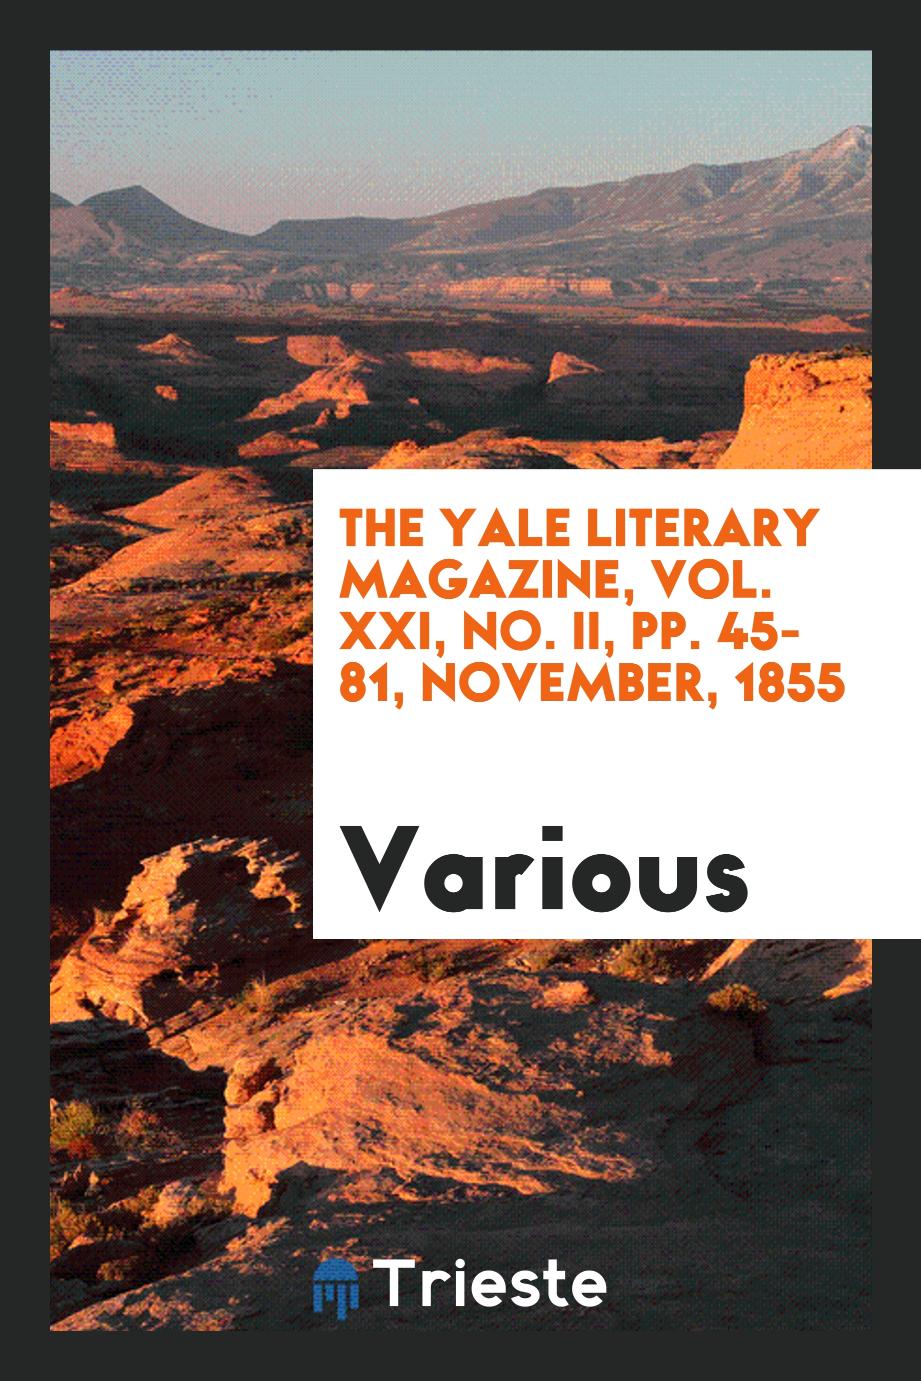 The Yale literary magazine, Vol. XXI, No. II, pp. 45-81, November, 1855